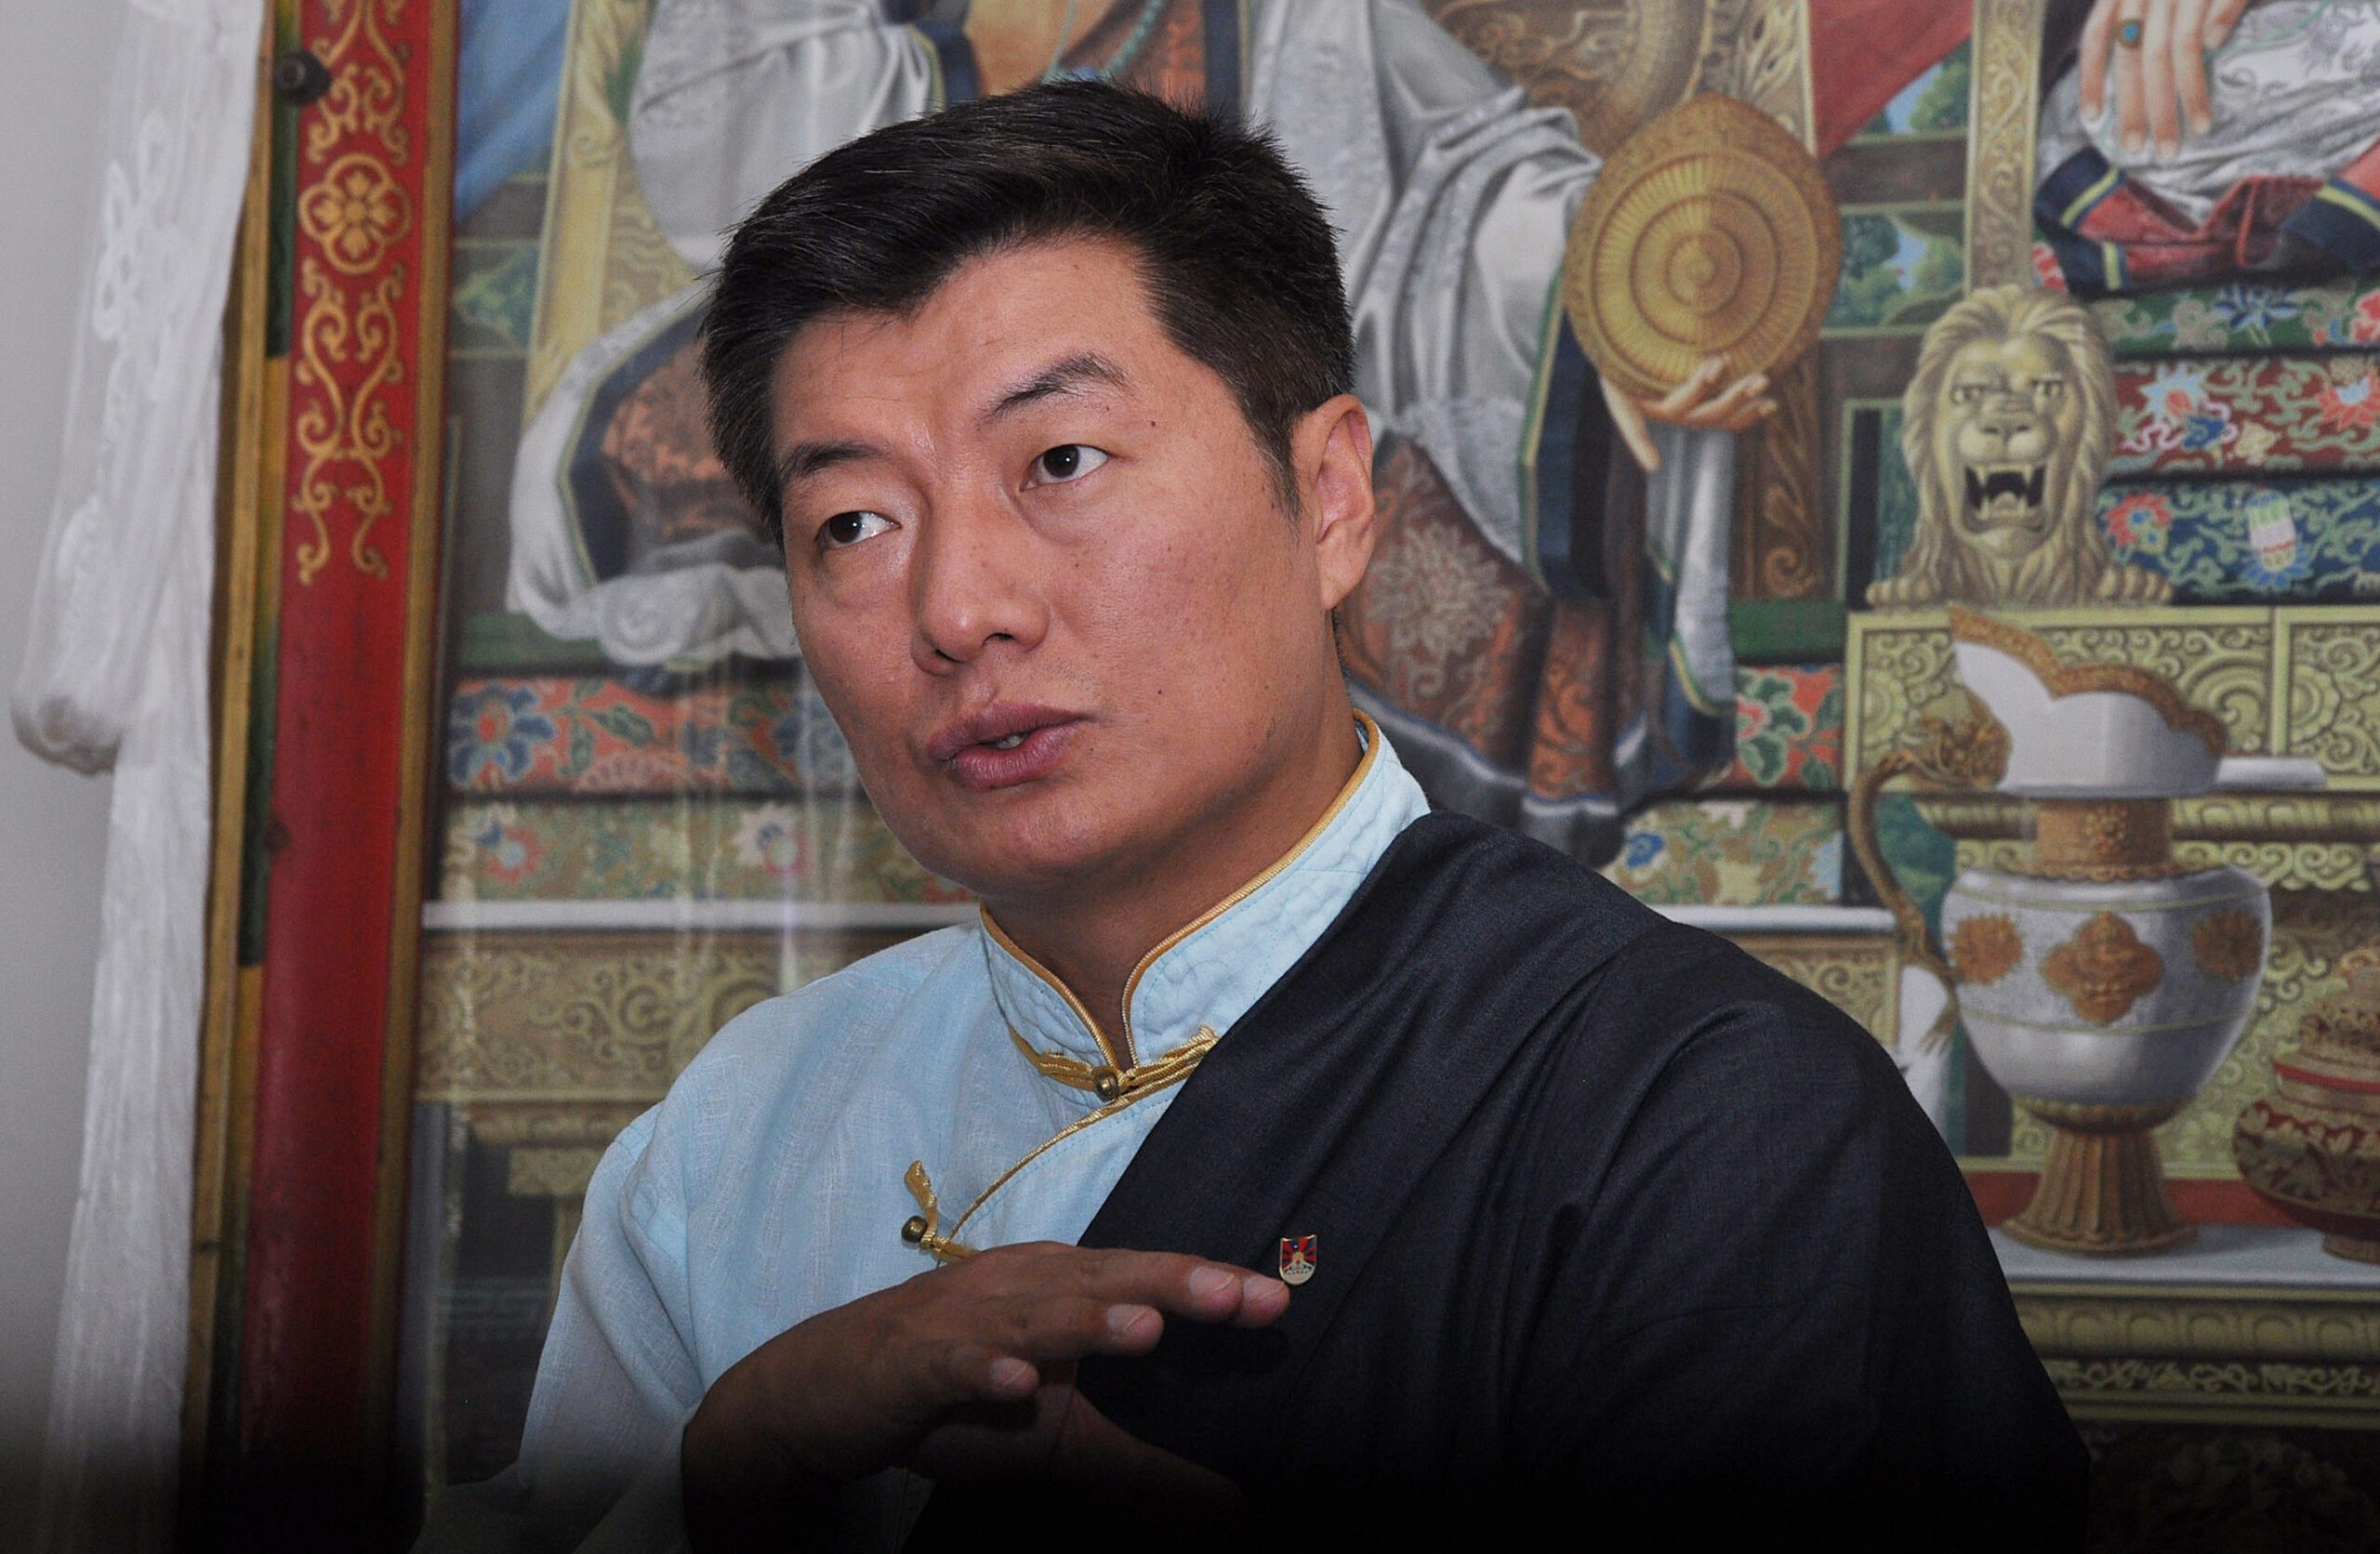 Exiled Tibetans reelect Lobsang Sangay as leader